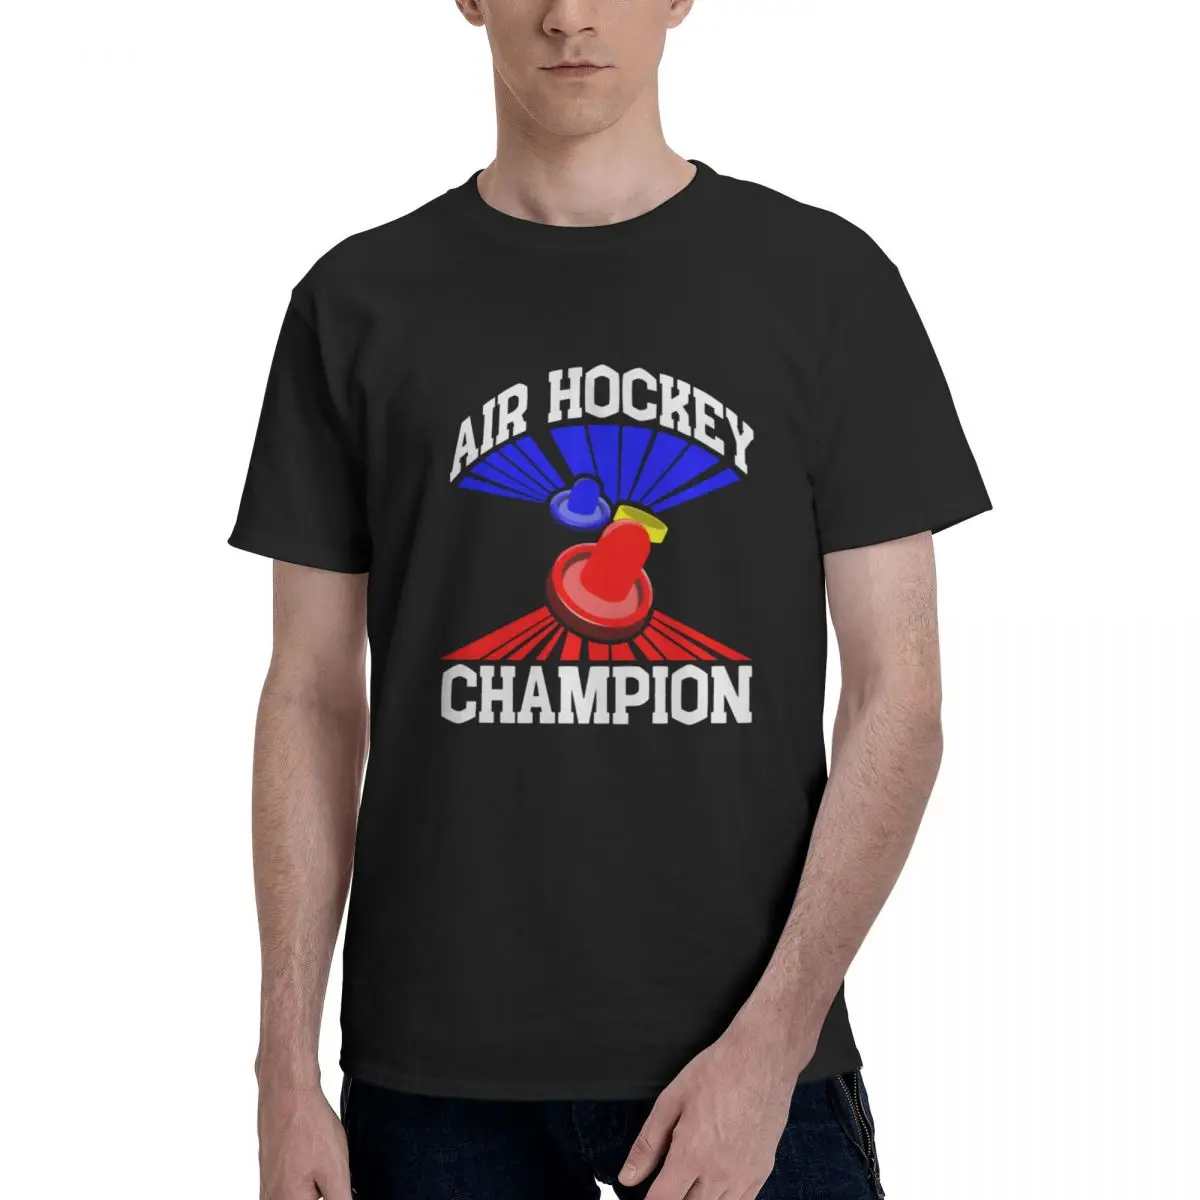 

Air Hockey Champion Essential Tee Men's Basic Short Sleeve T-Shirt Vintage Tops Free shipping